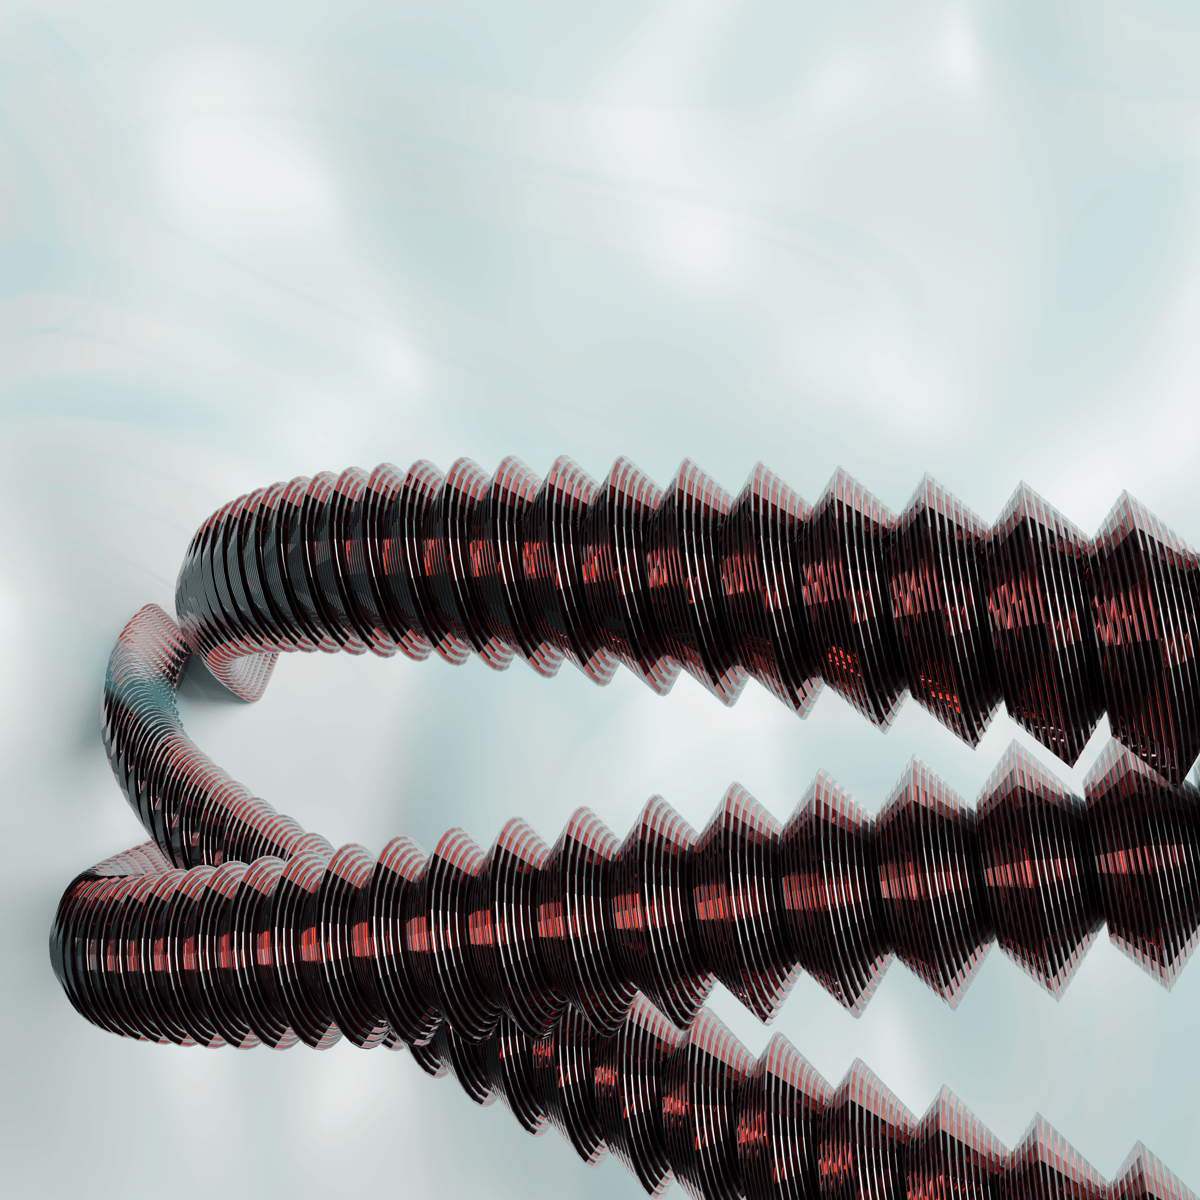 Brutalism metal striped painting   Scifi Wires 3d artist blender red cords